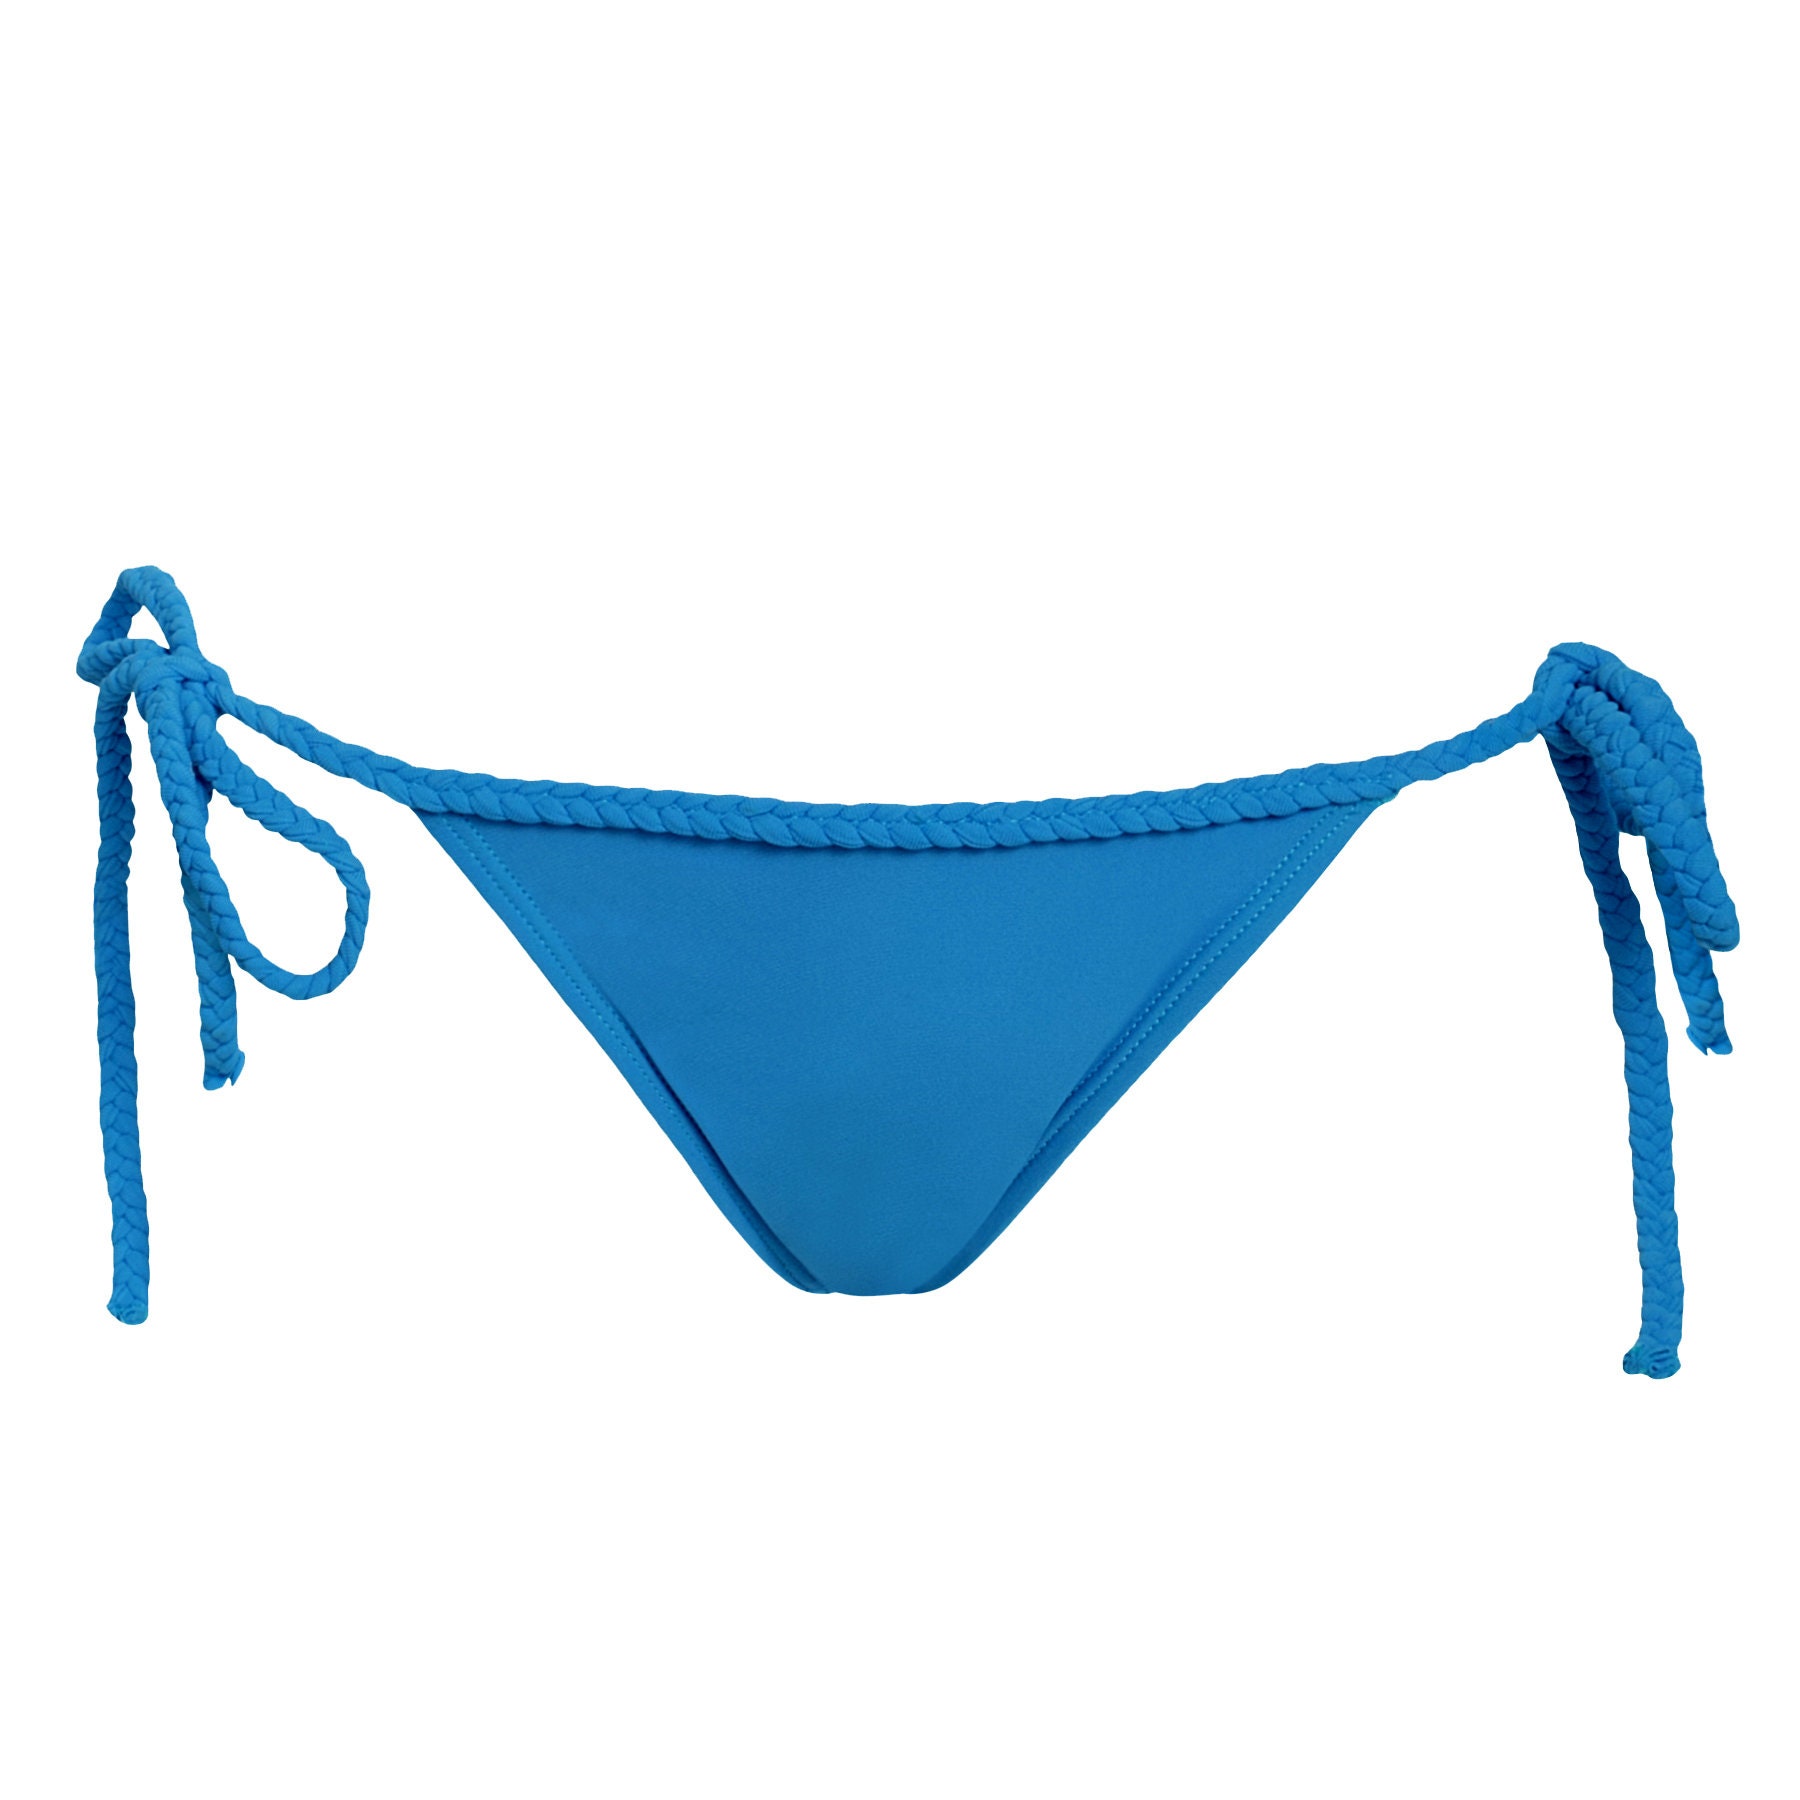 Sky Blue Braided Thong Bikini Bottom | Etsy